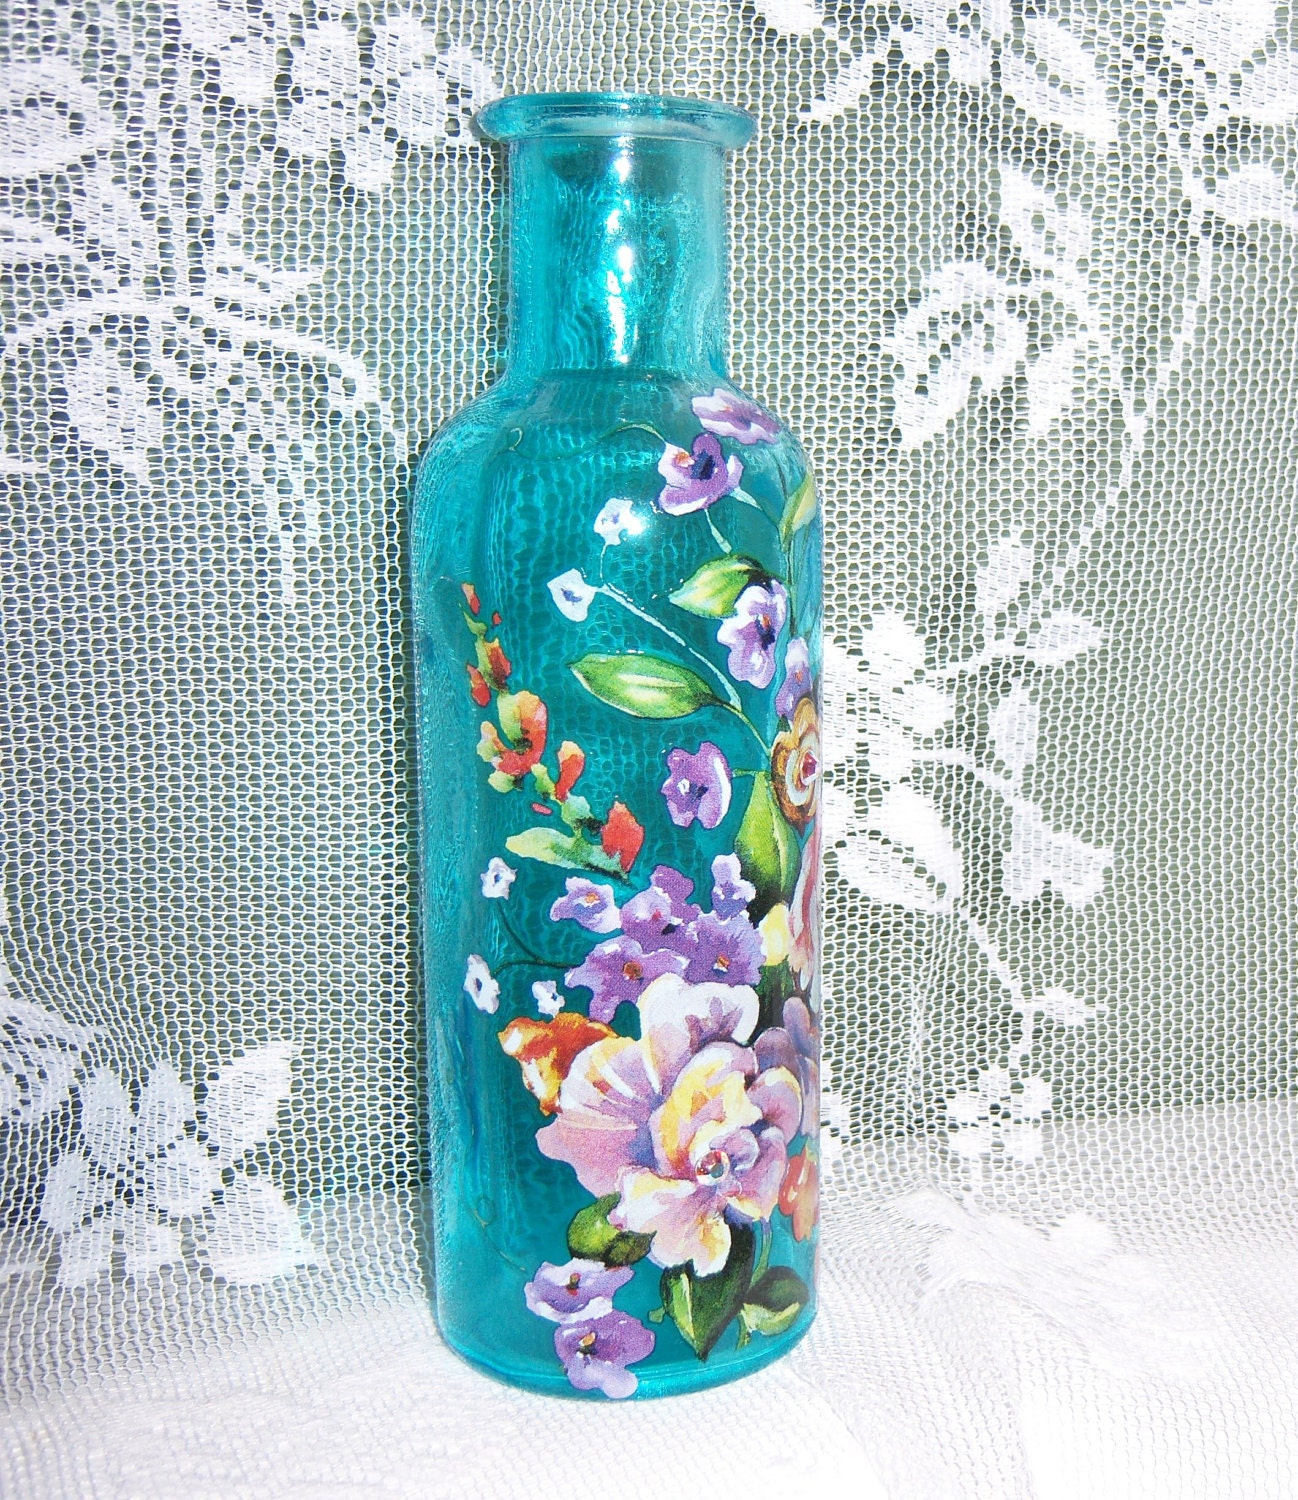 Aqua glass bud vase - multi colored floral with iridescent swarovski crystals